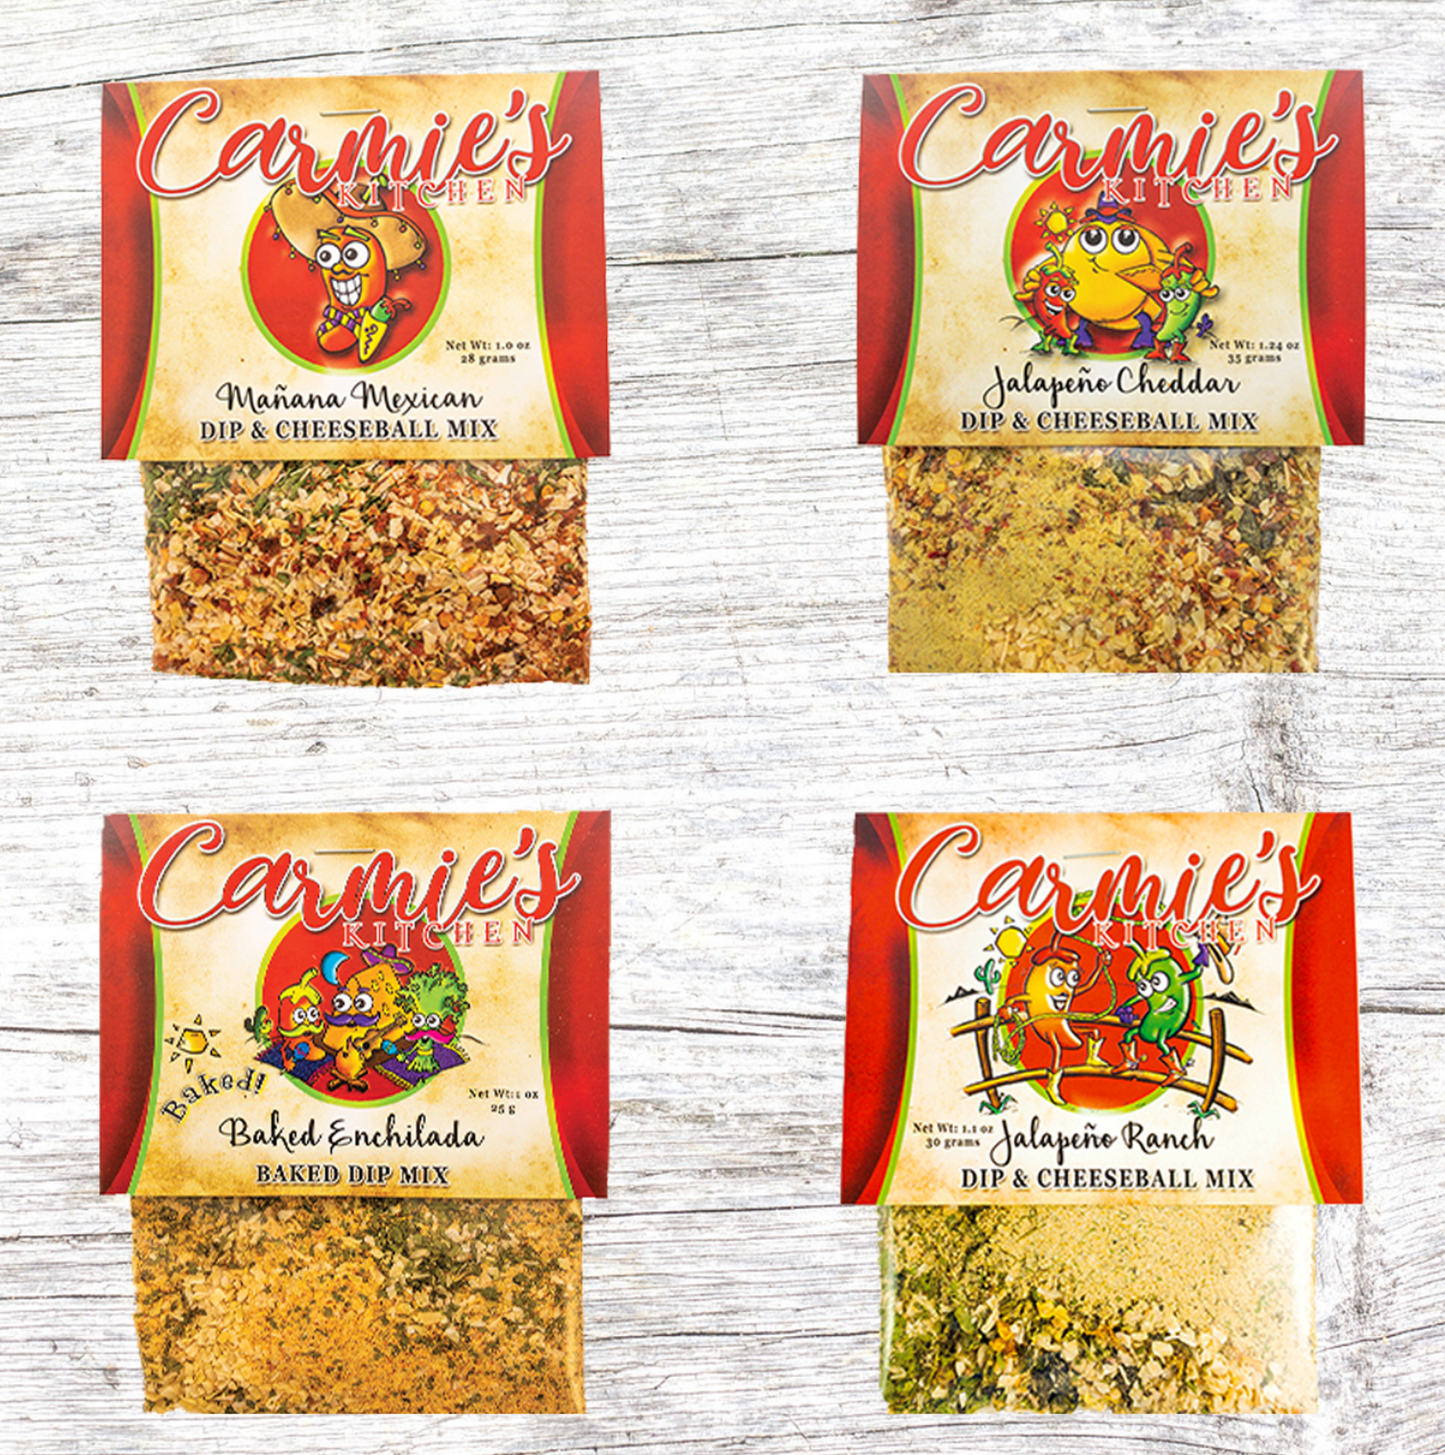 Carmie's Kitchen Dip & Cheeseball Mix